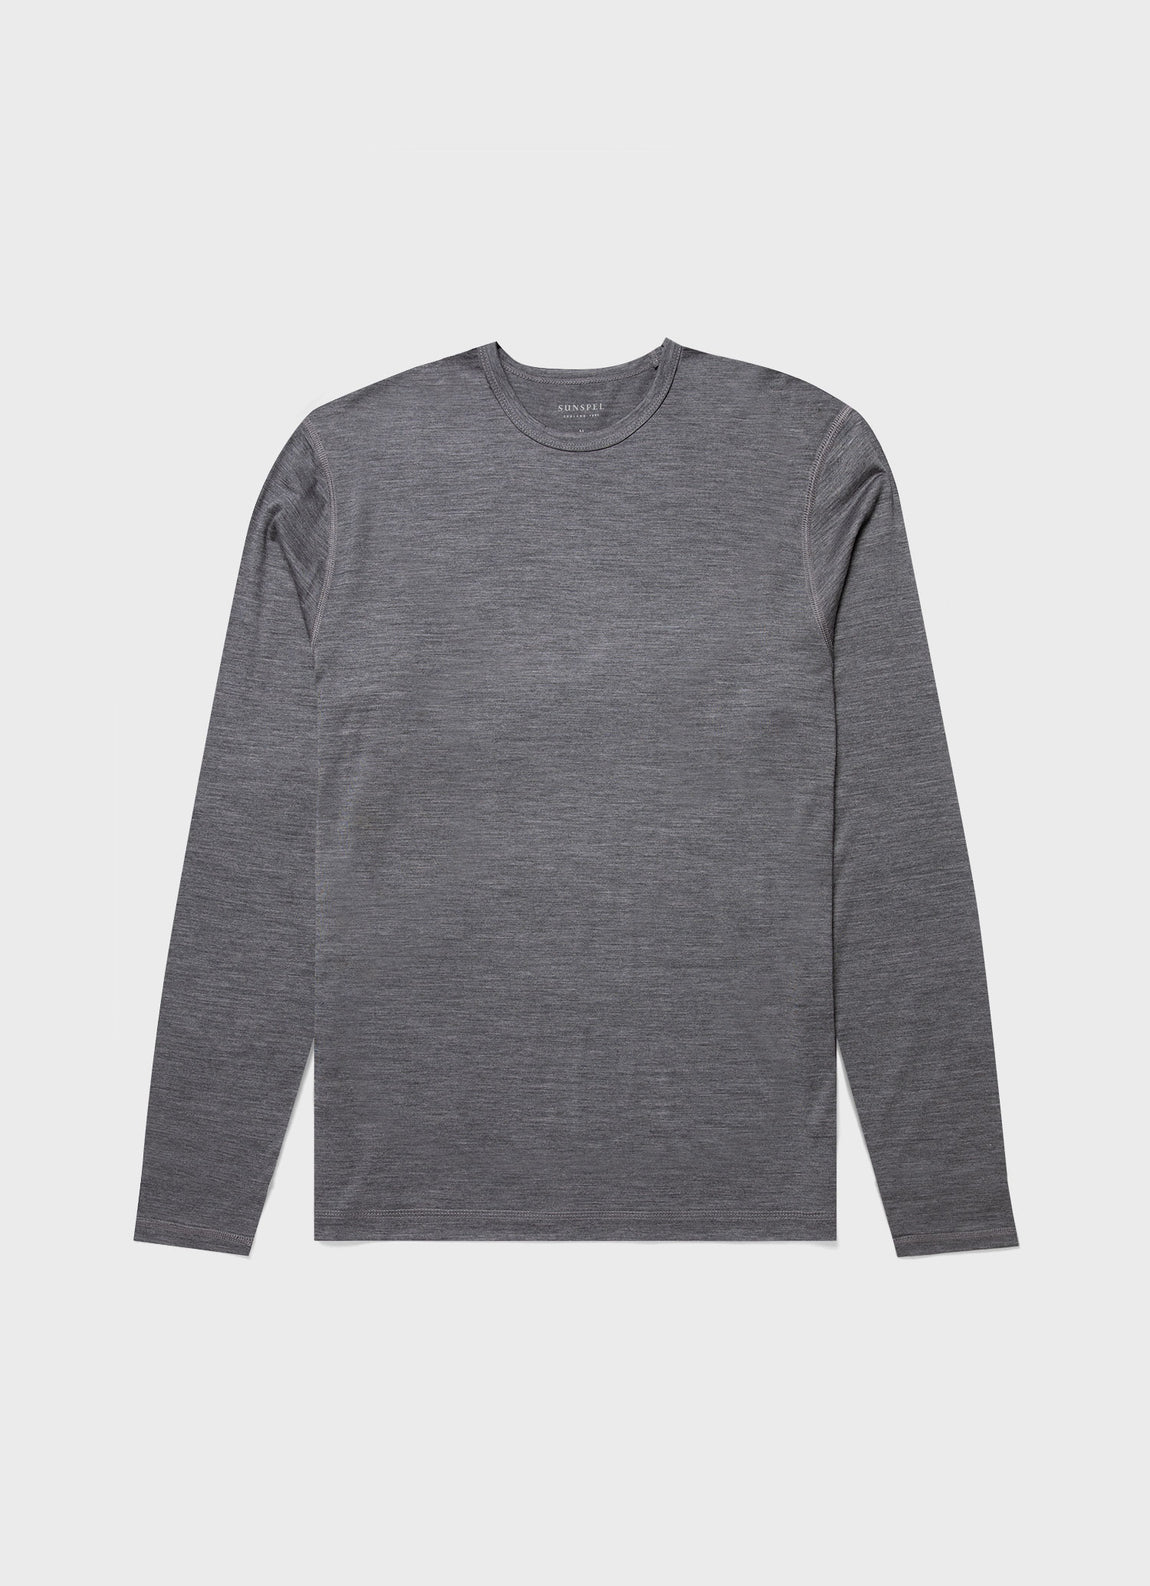 Men's Long Sleeve Thermal Merino T-shirt in Grey Melange